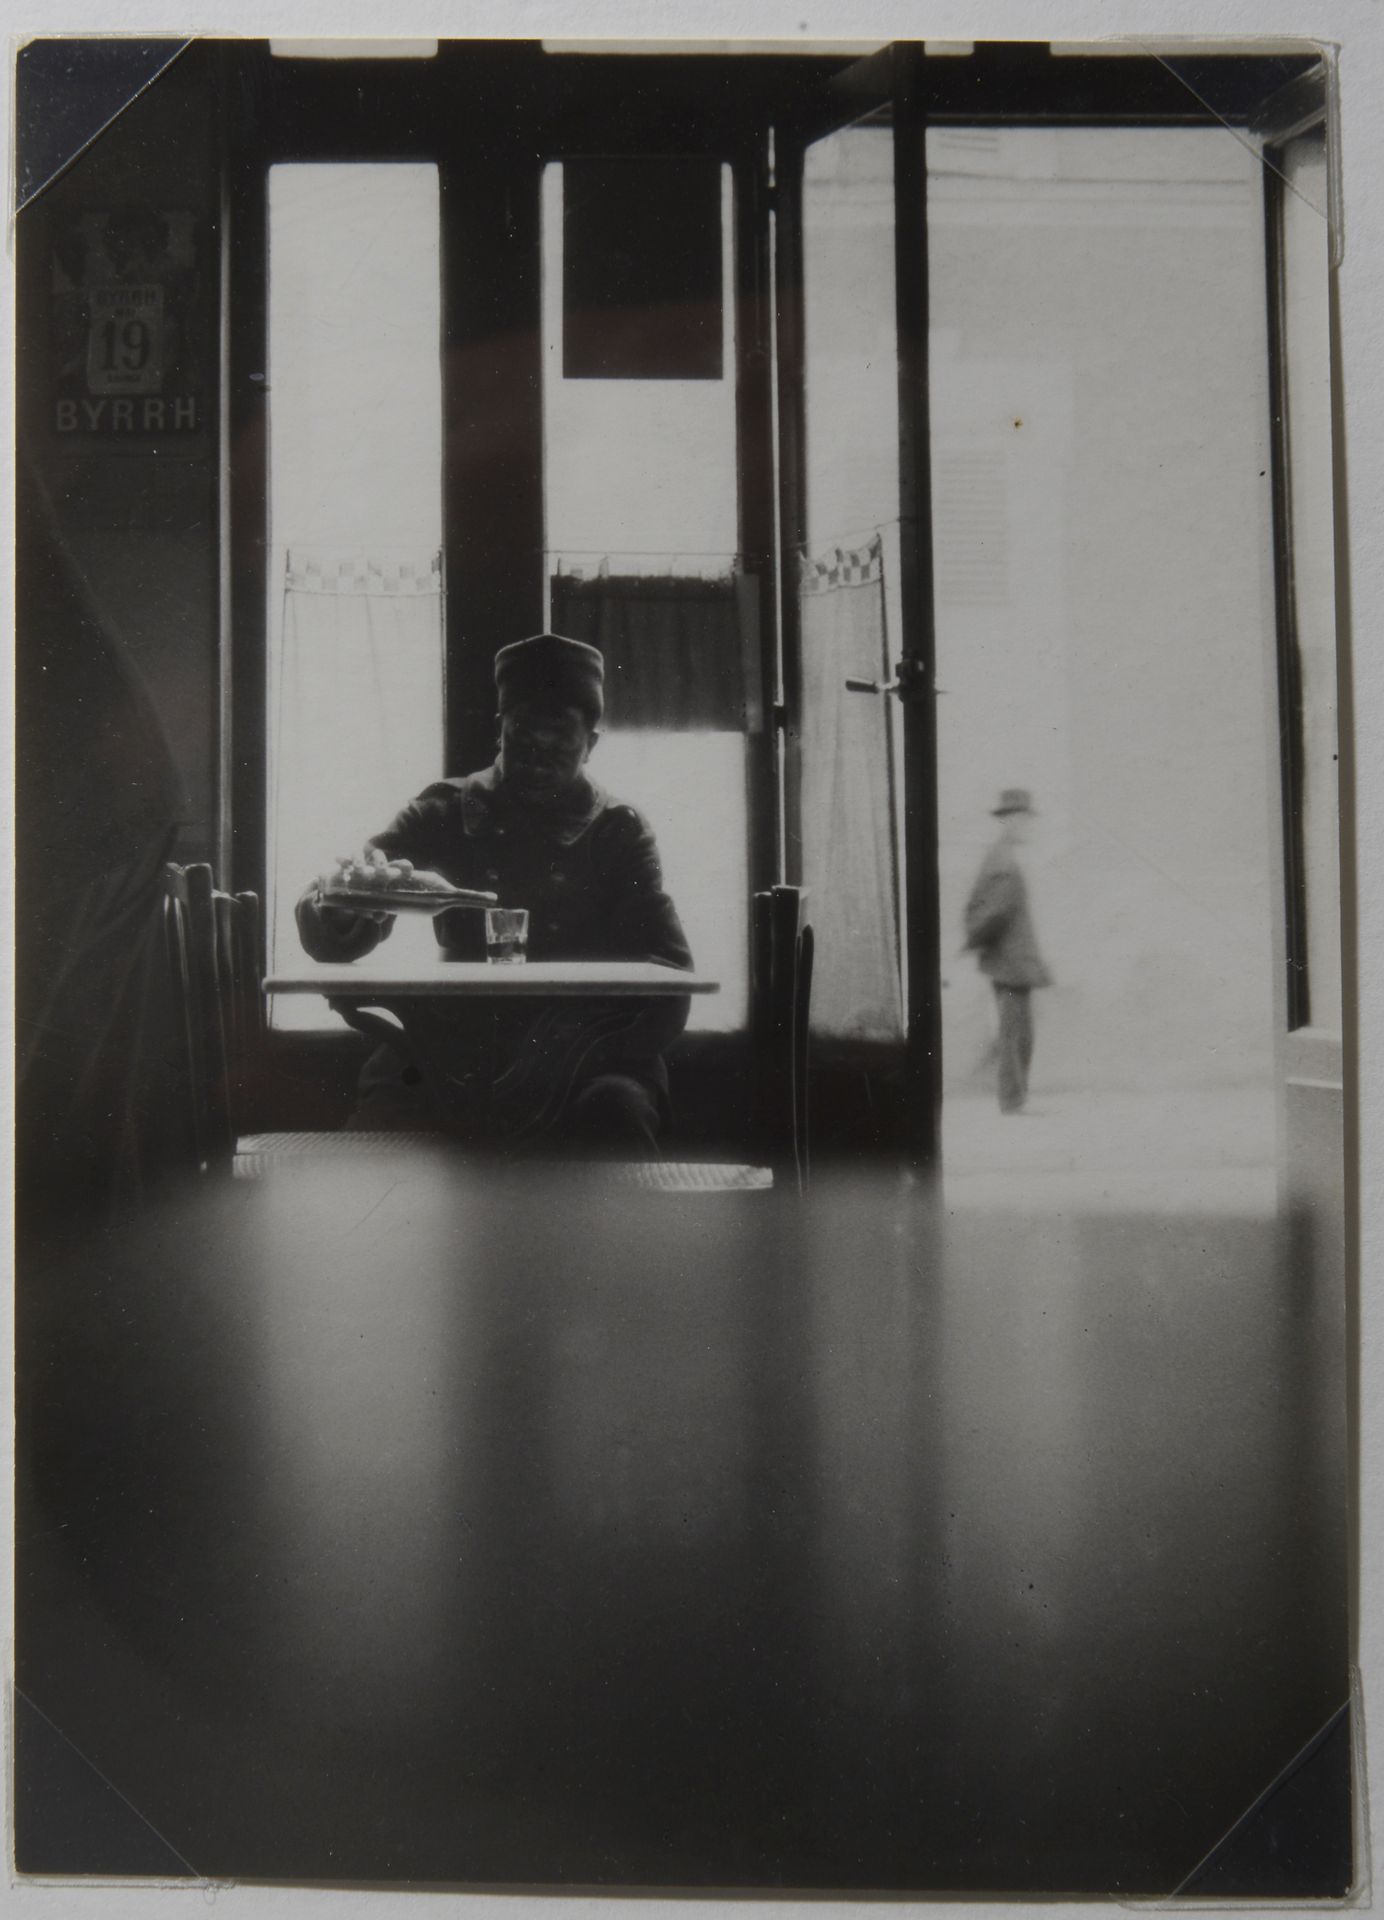 Null 杰曼-克鲁尔(1897-1985)

卡布洛特。巴黎，1928年。

复古银质印刷品，背面有摄影师的印章。

16.5 x 12 cm